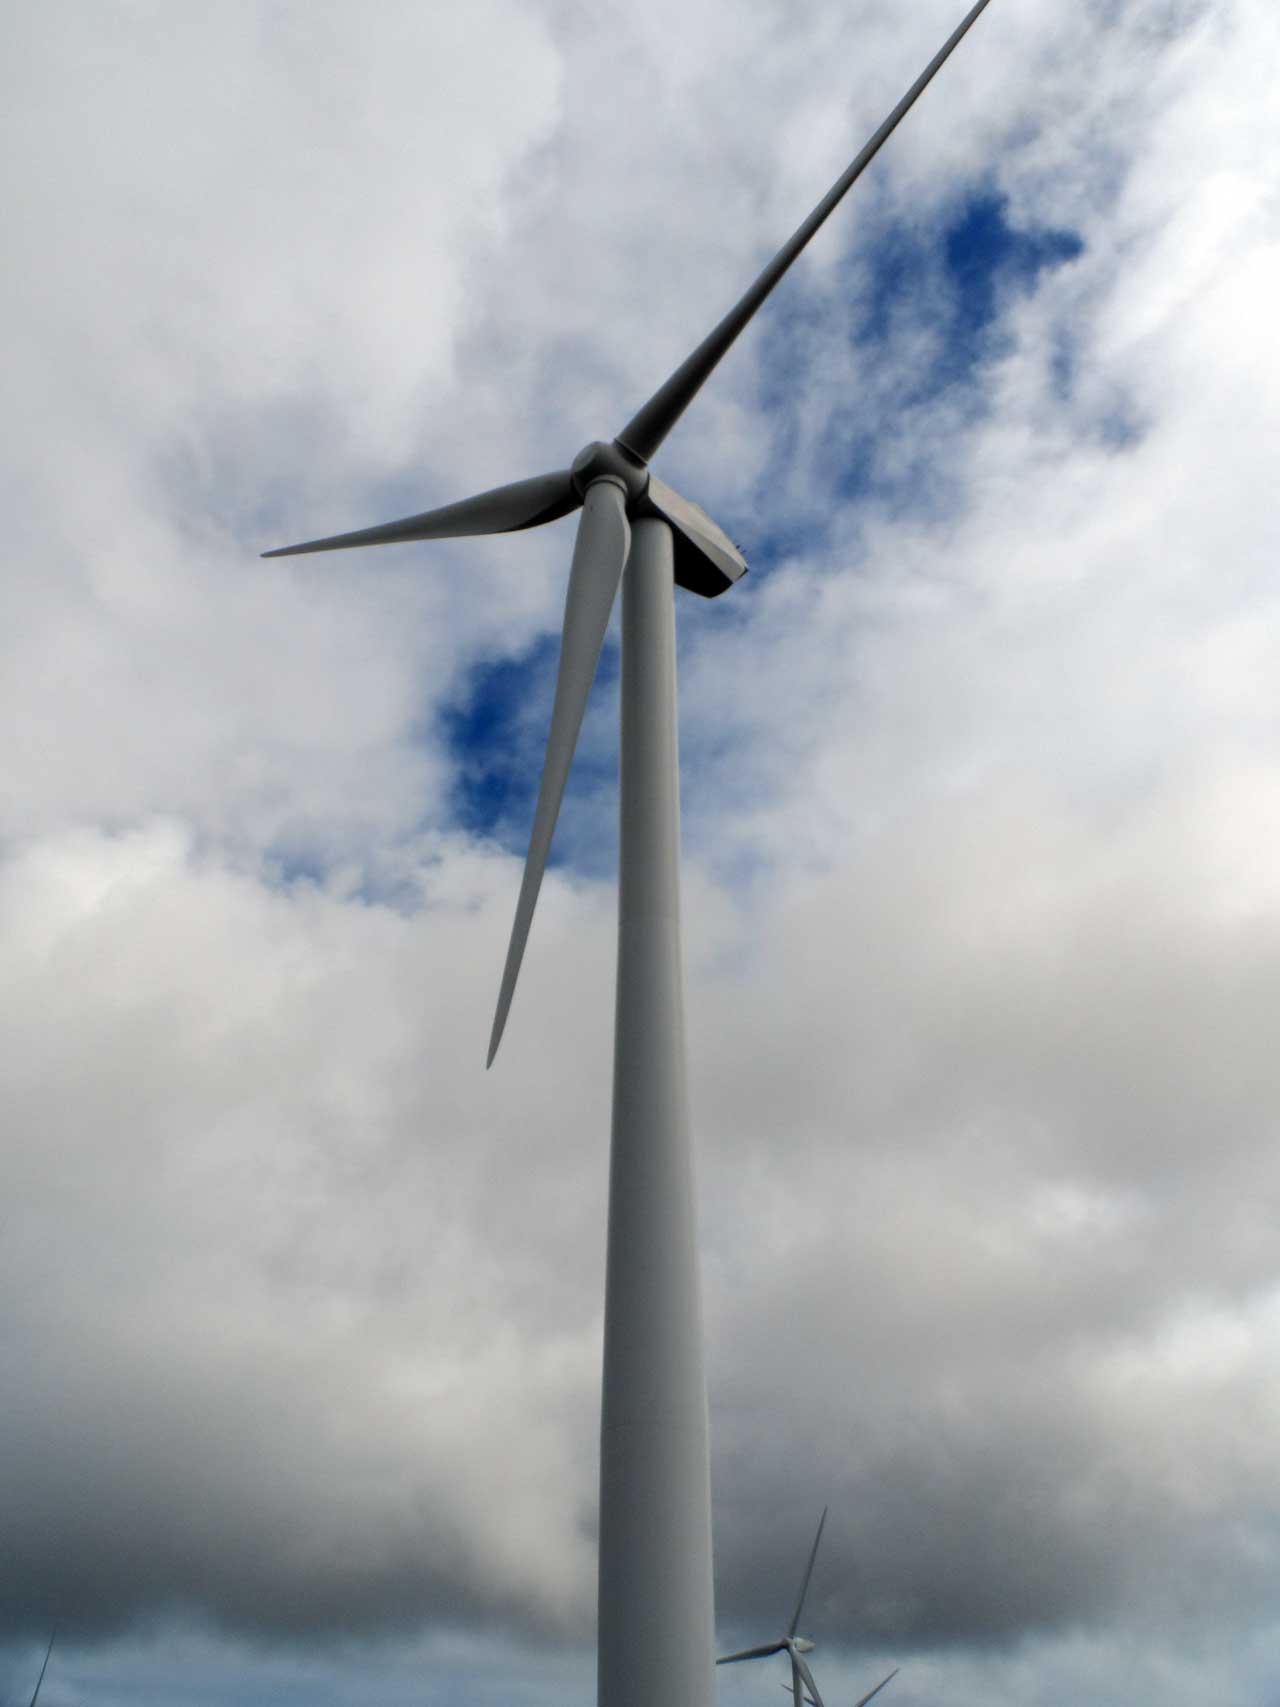 Photo: Open Day For Community At Gordonbush Wind Farm